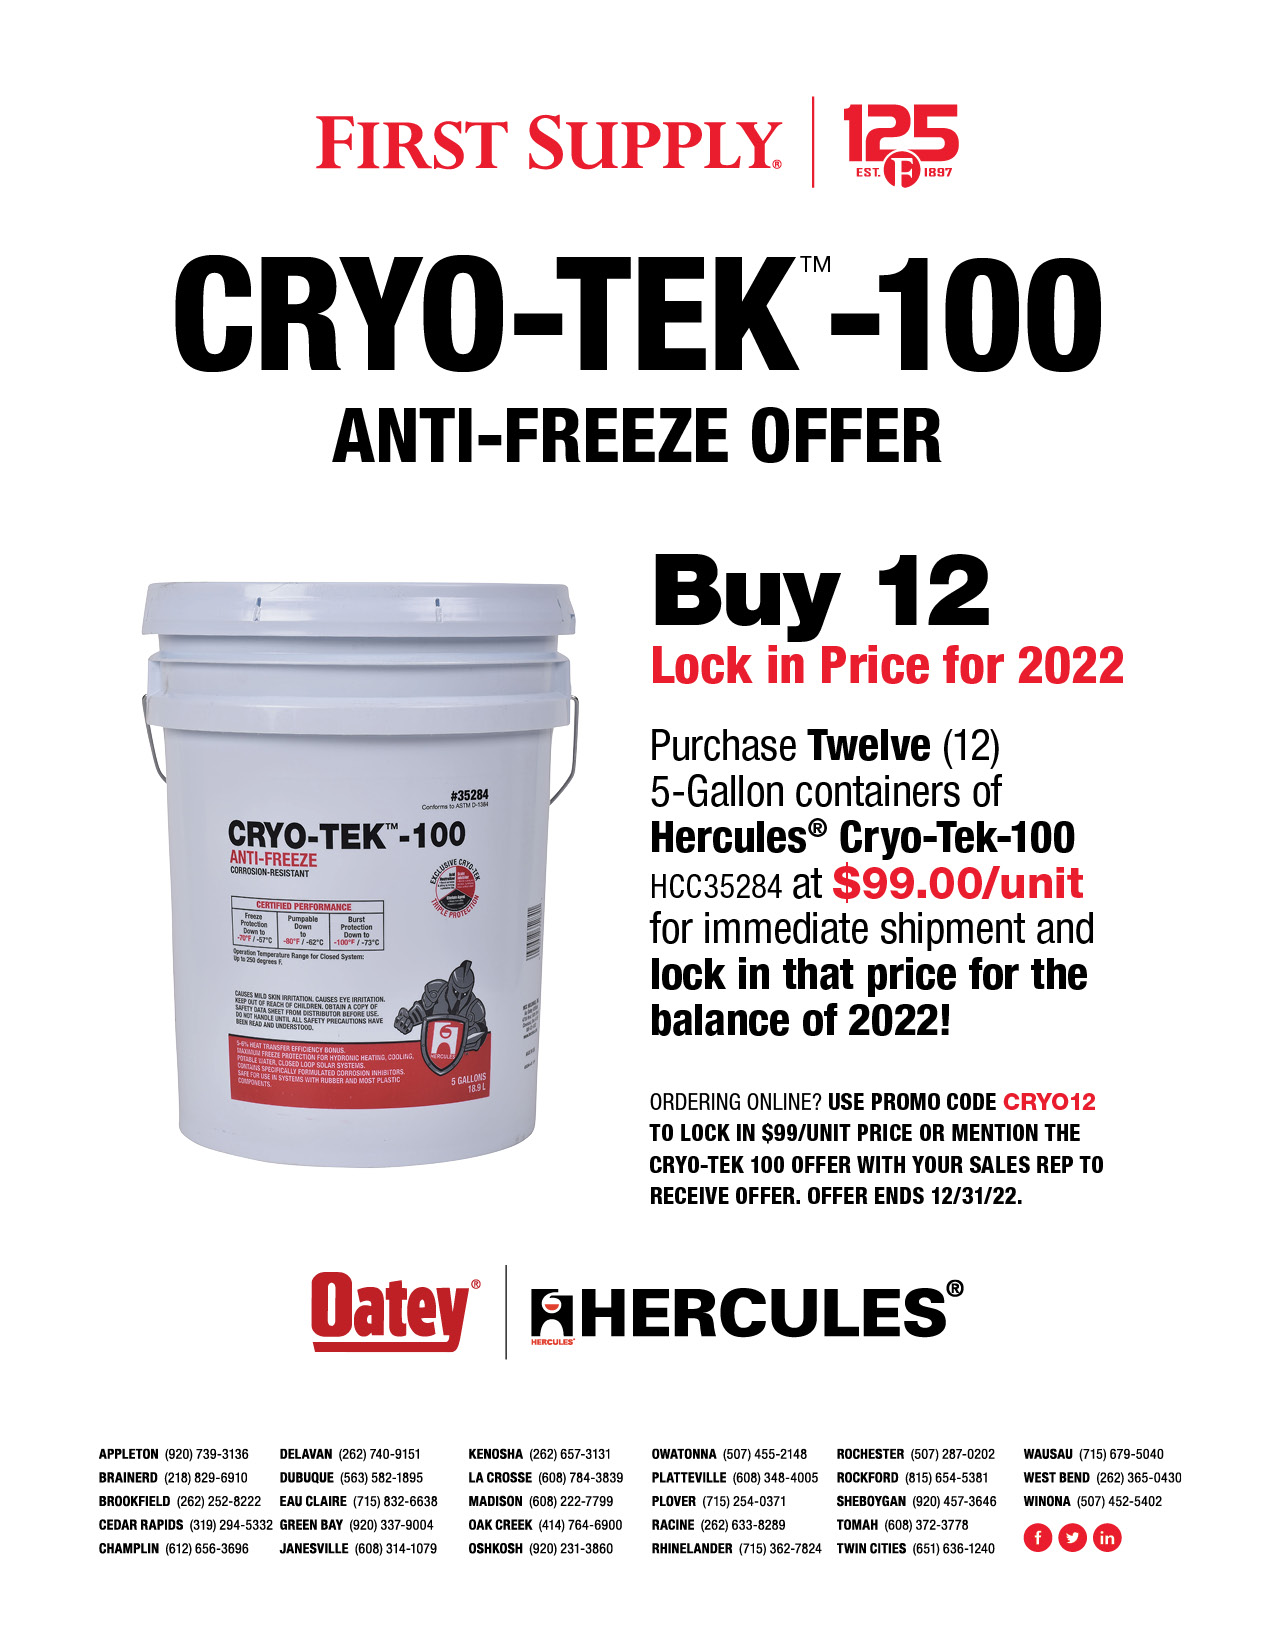 Cryo-Tek-100 Anti-Freeze Offer